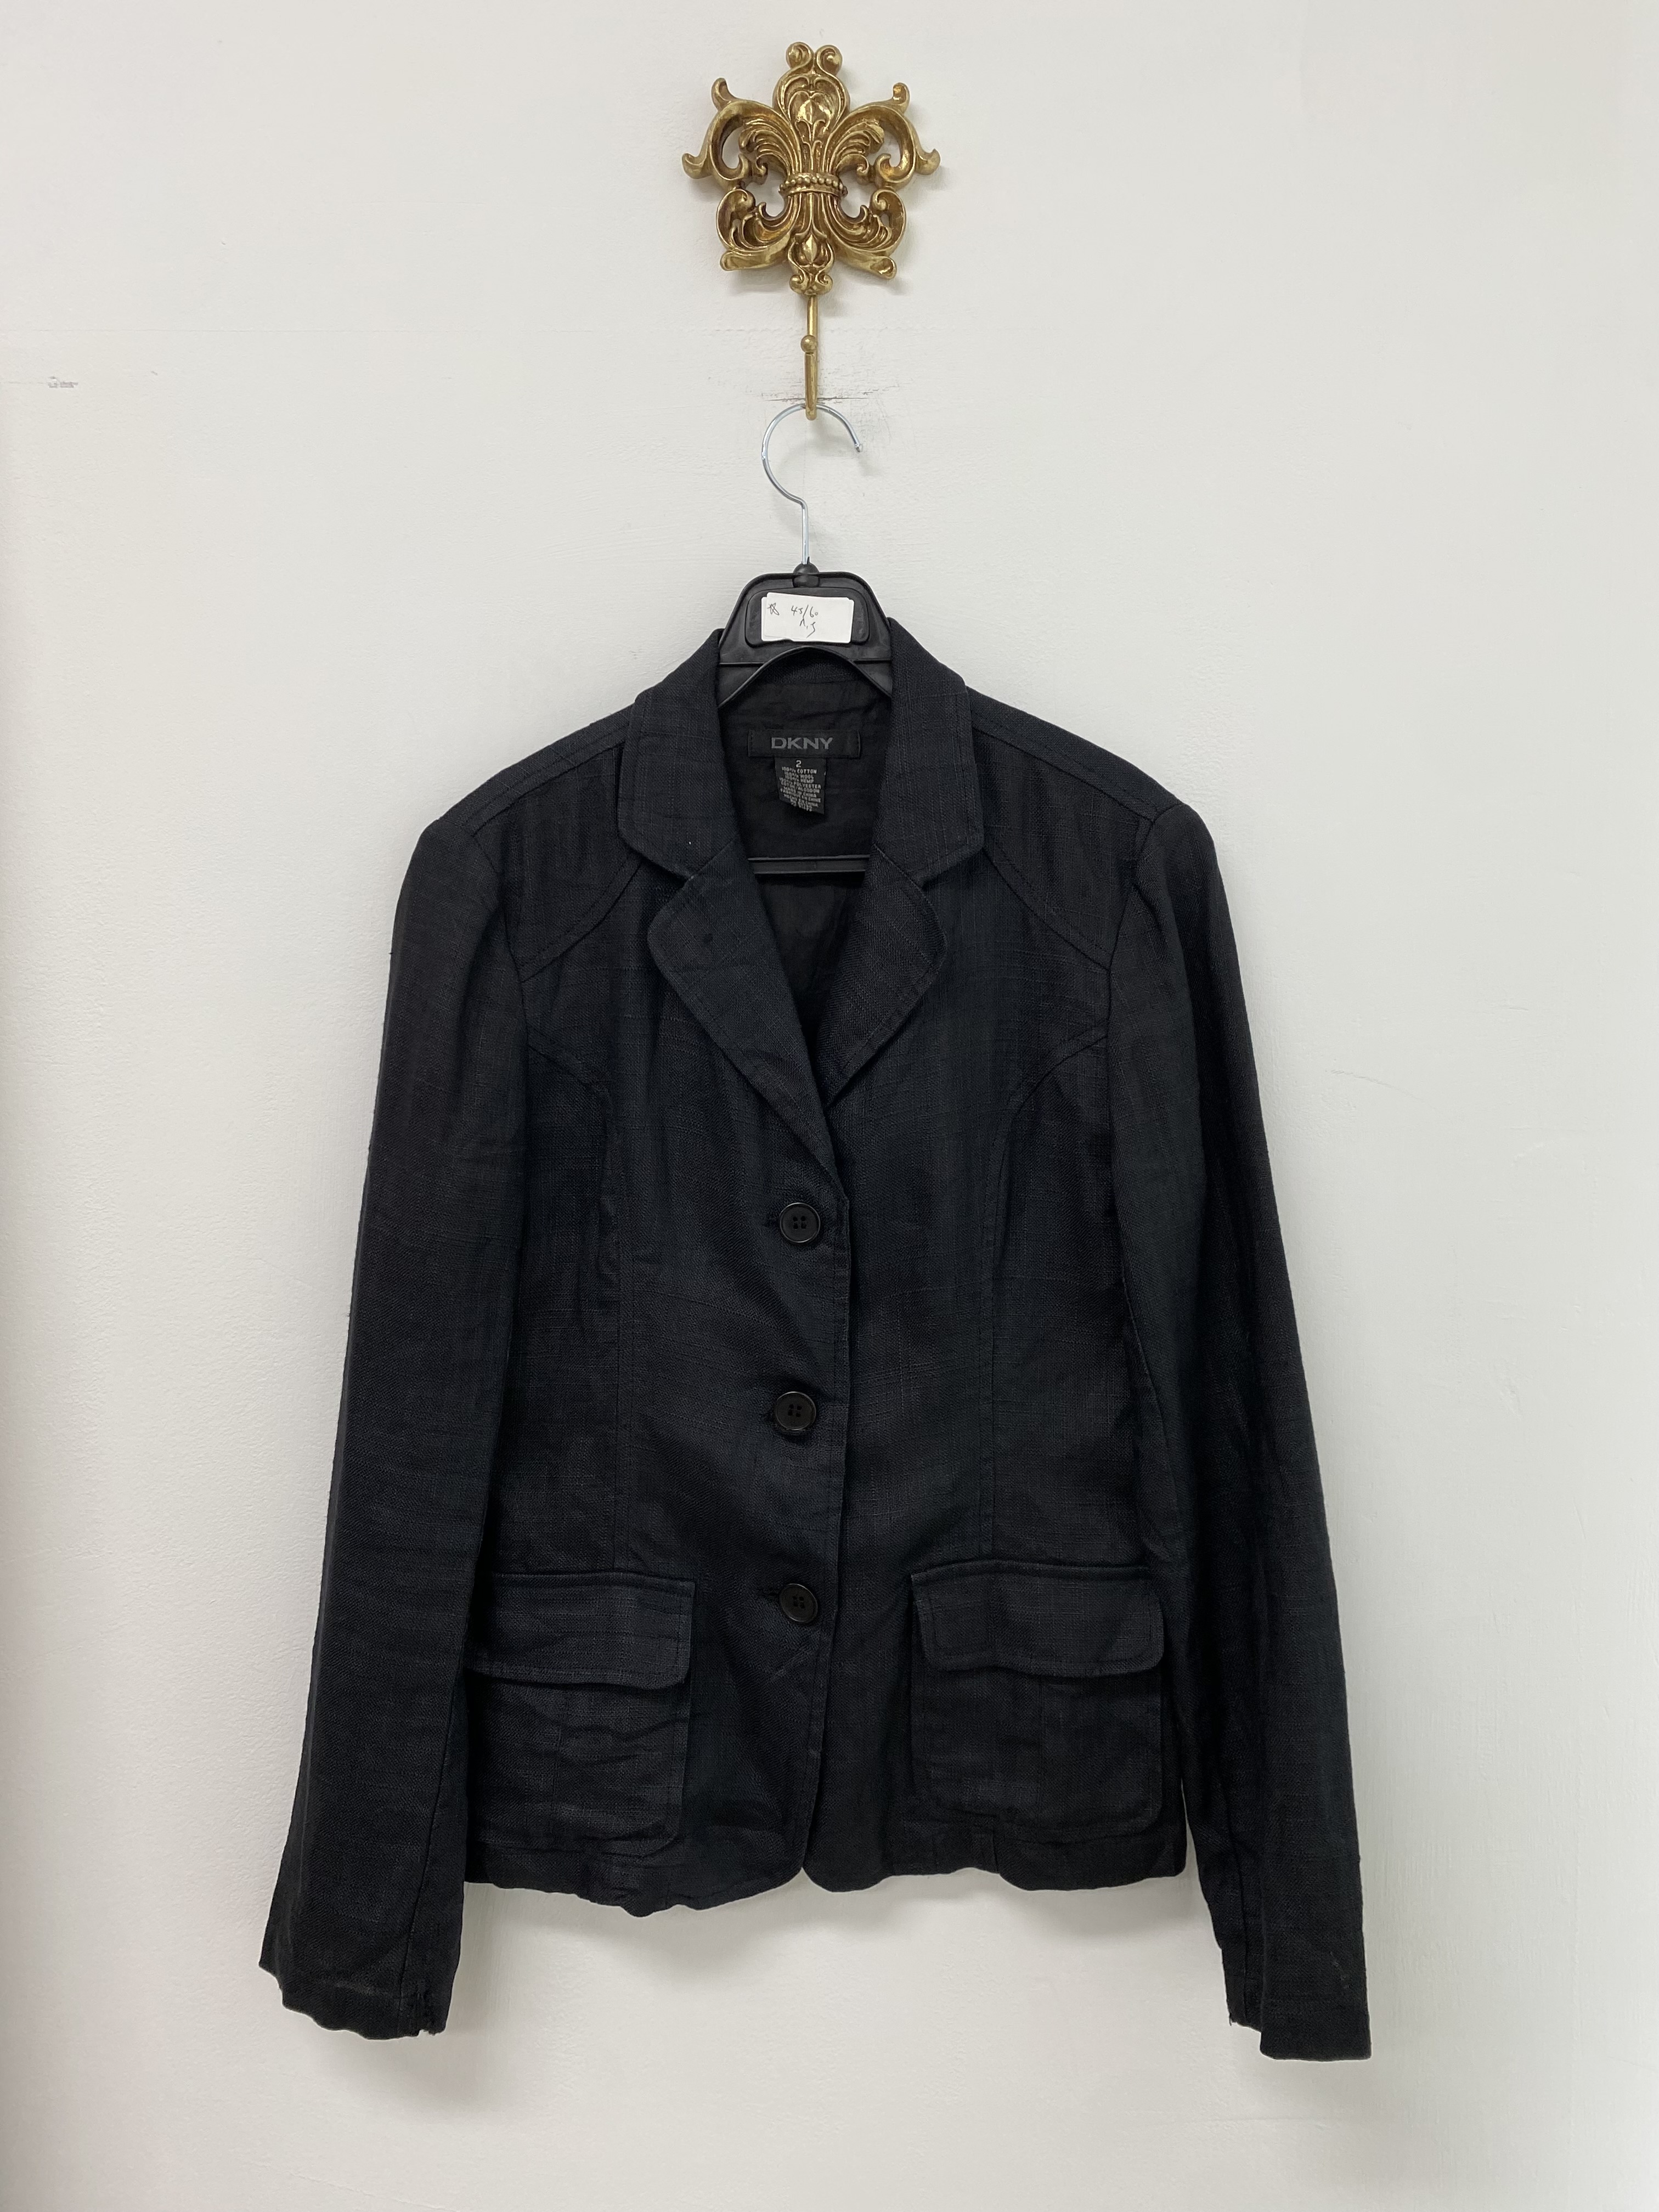 DKNY dark navy cotton 3 button pocket jacket